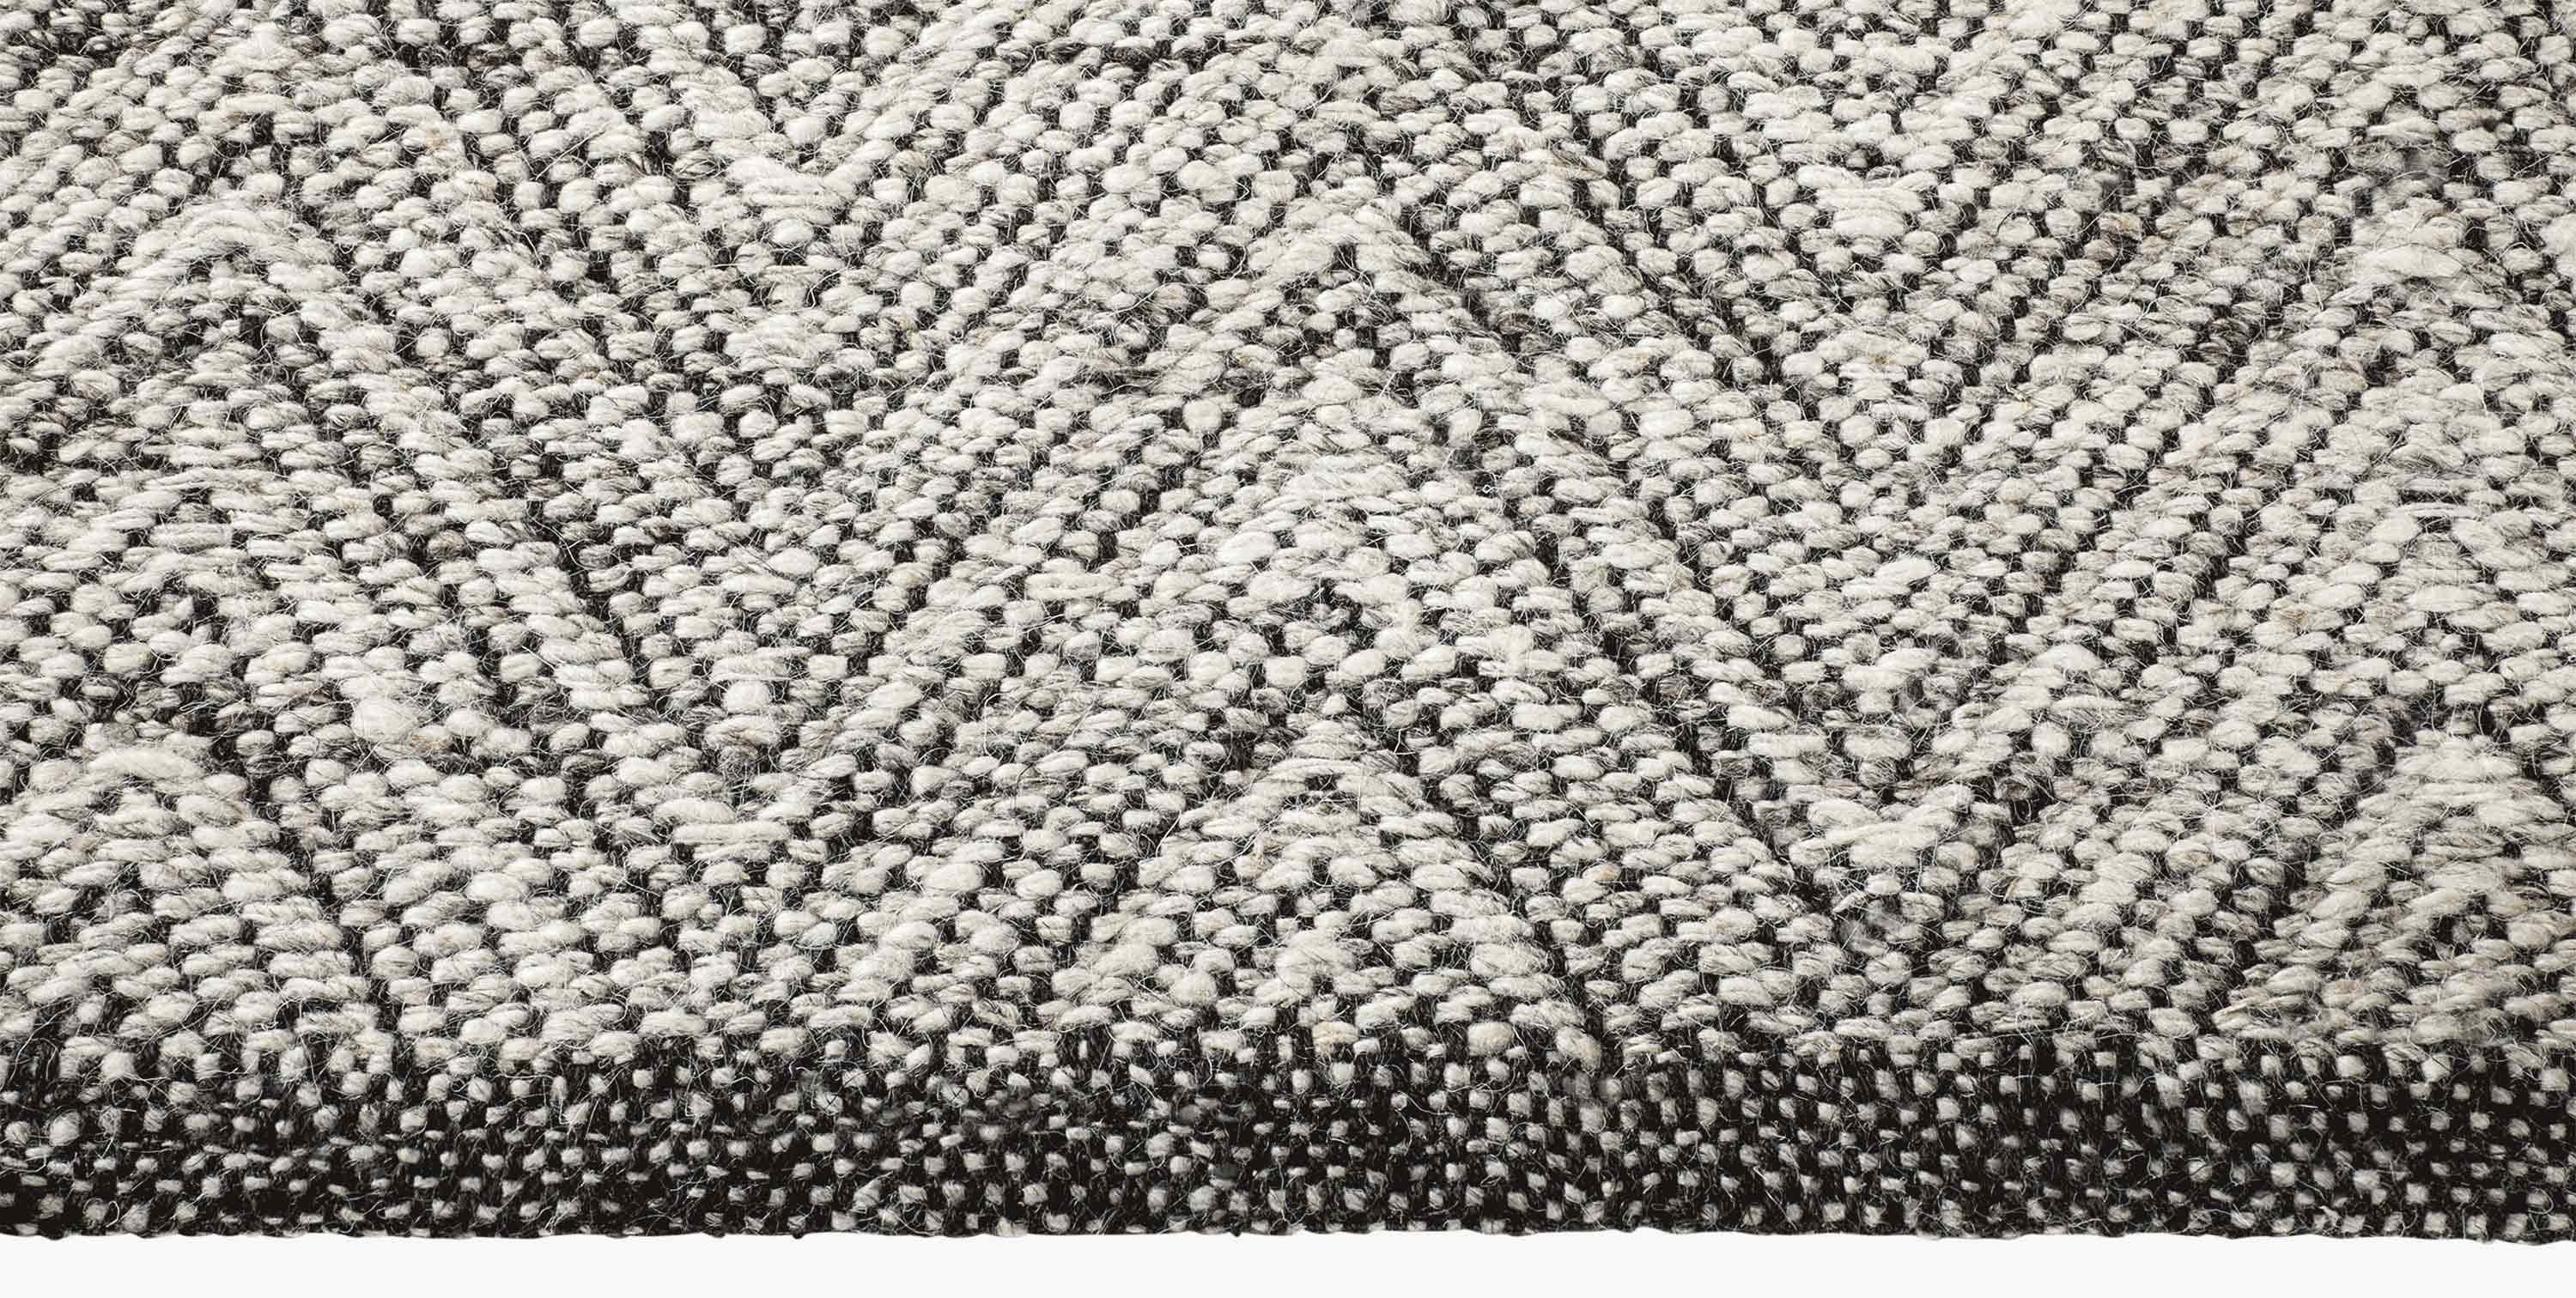 For Sale: Silver Ben Soleimani Ceyah Rug– Hand-woven Plush Textured Wool + Linen Charcoal 9'x12' 3